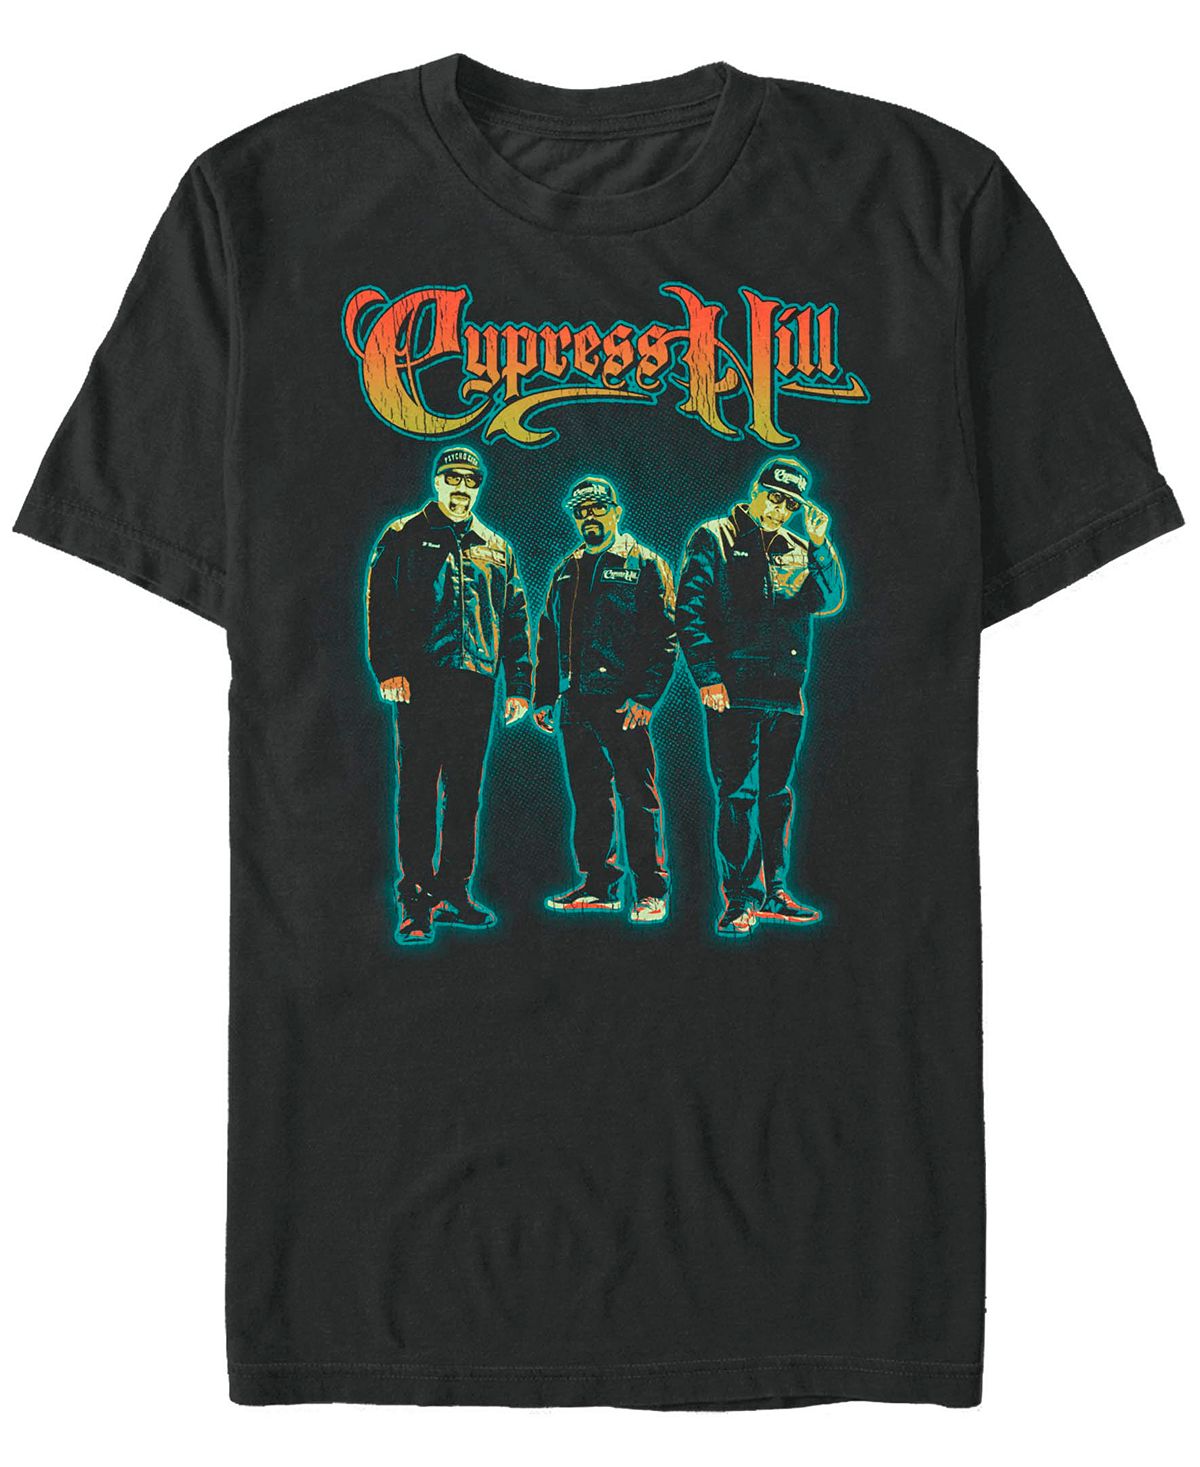 Мужская футболка с коротким рукавом cypress hill trio time Fifth Sun, черный